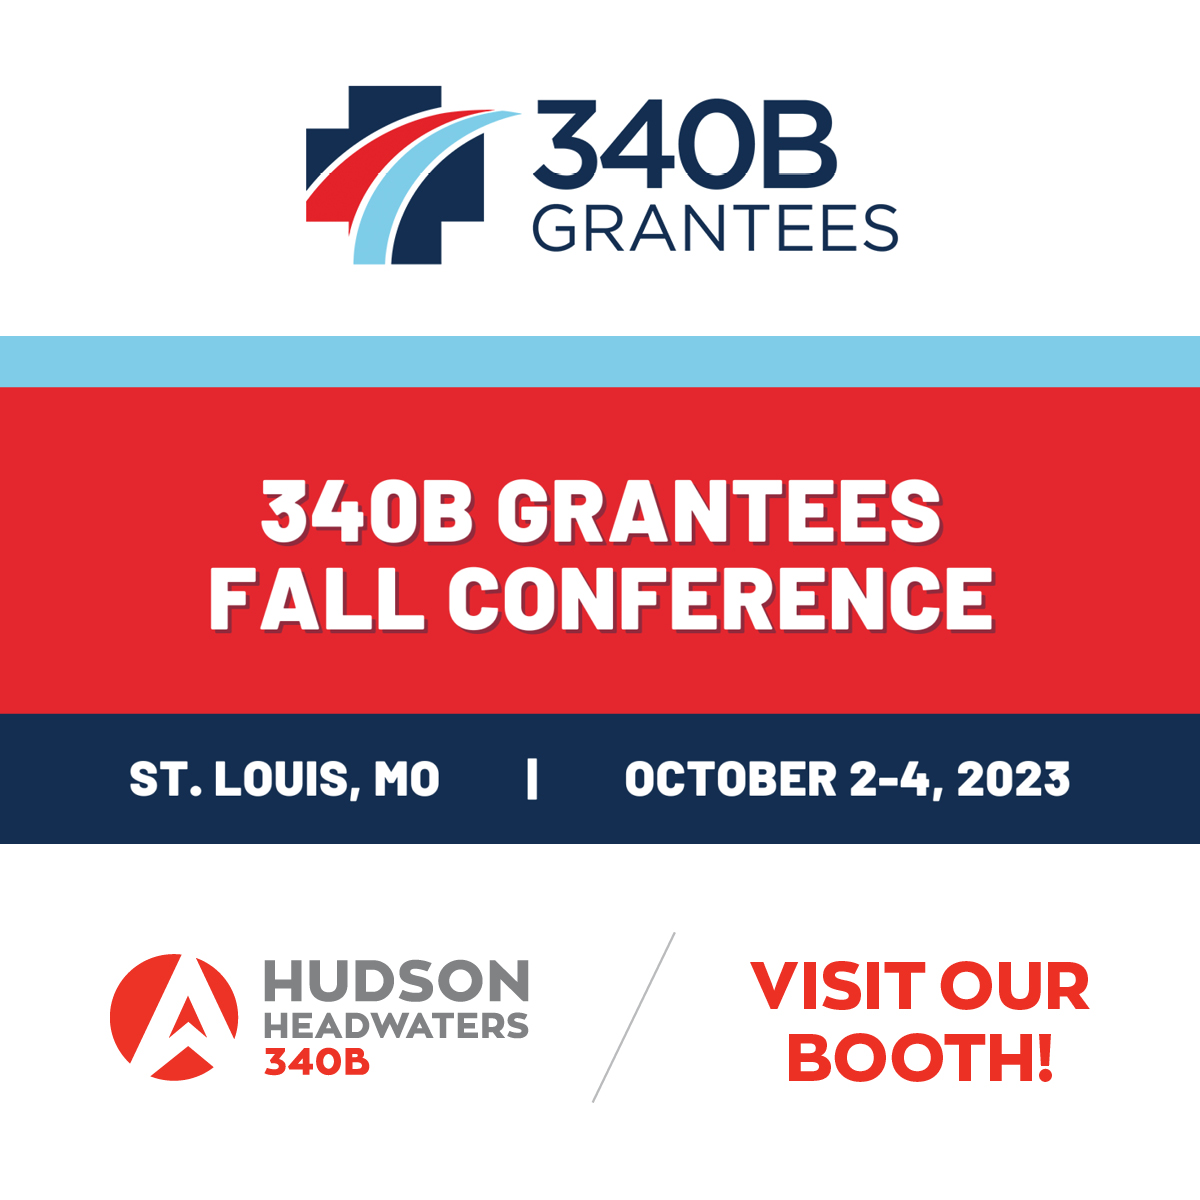 340b grantees fall conference